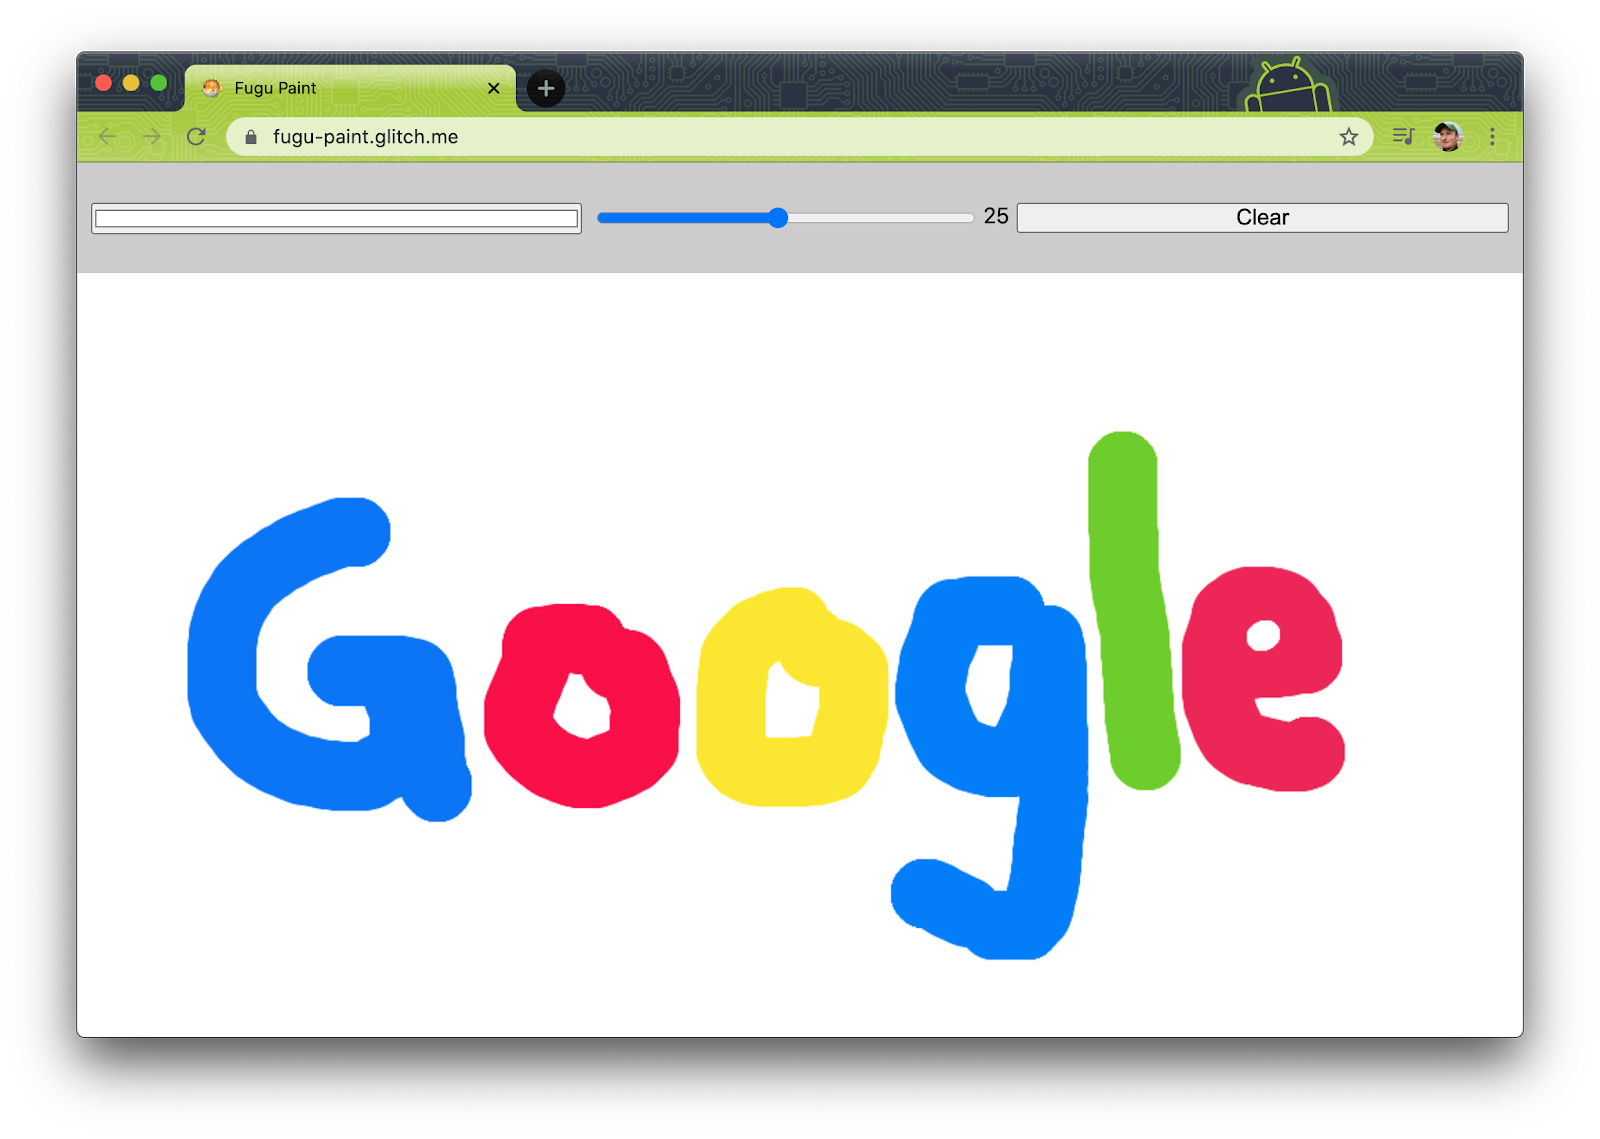 Fugu Greetings 基准 PWA，在一个大画布上绘制了“Google”字样。